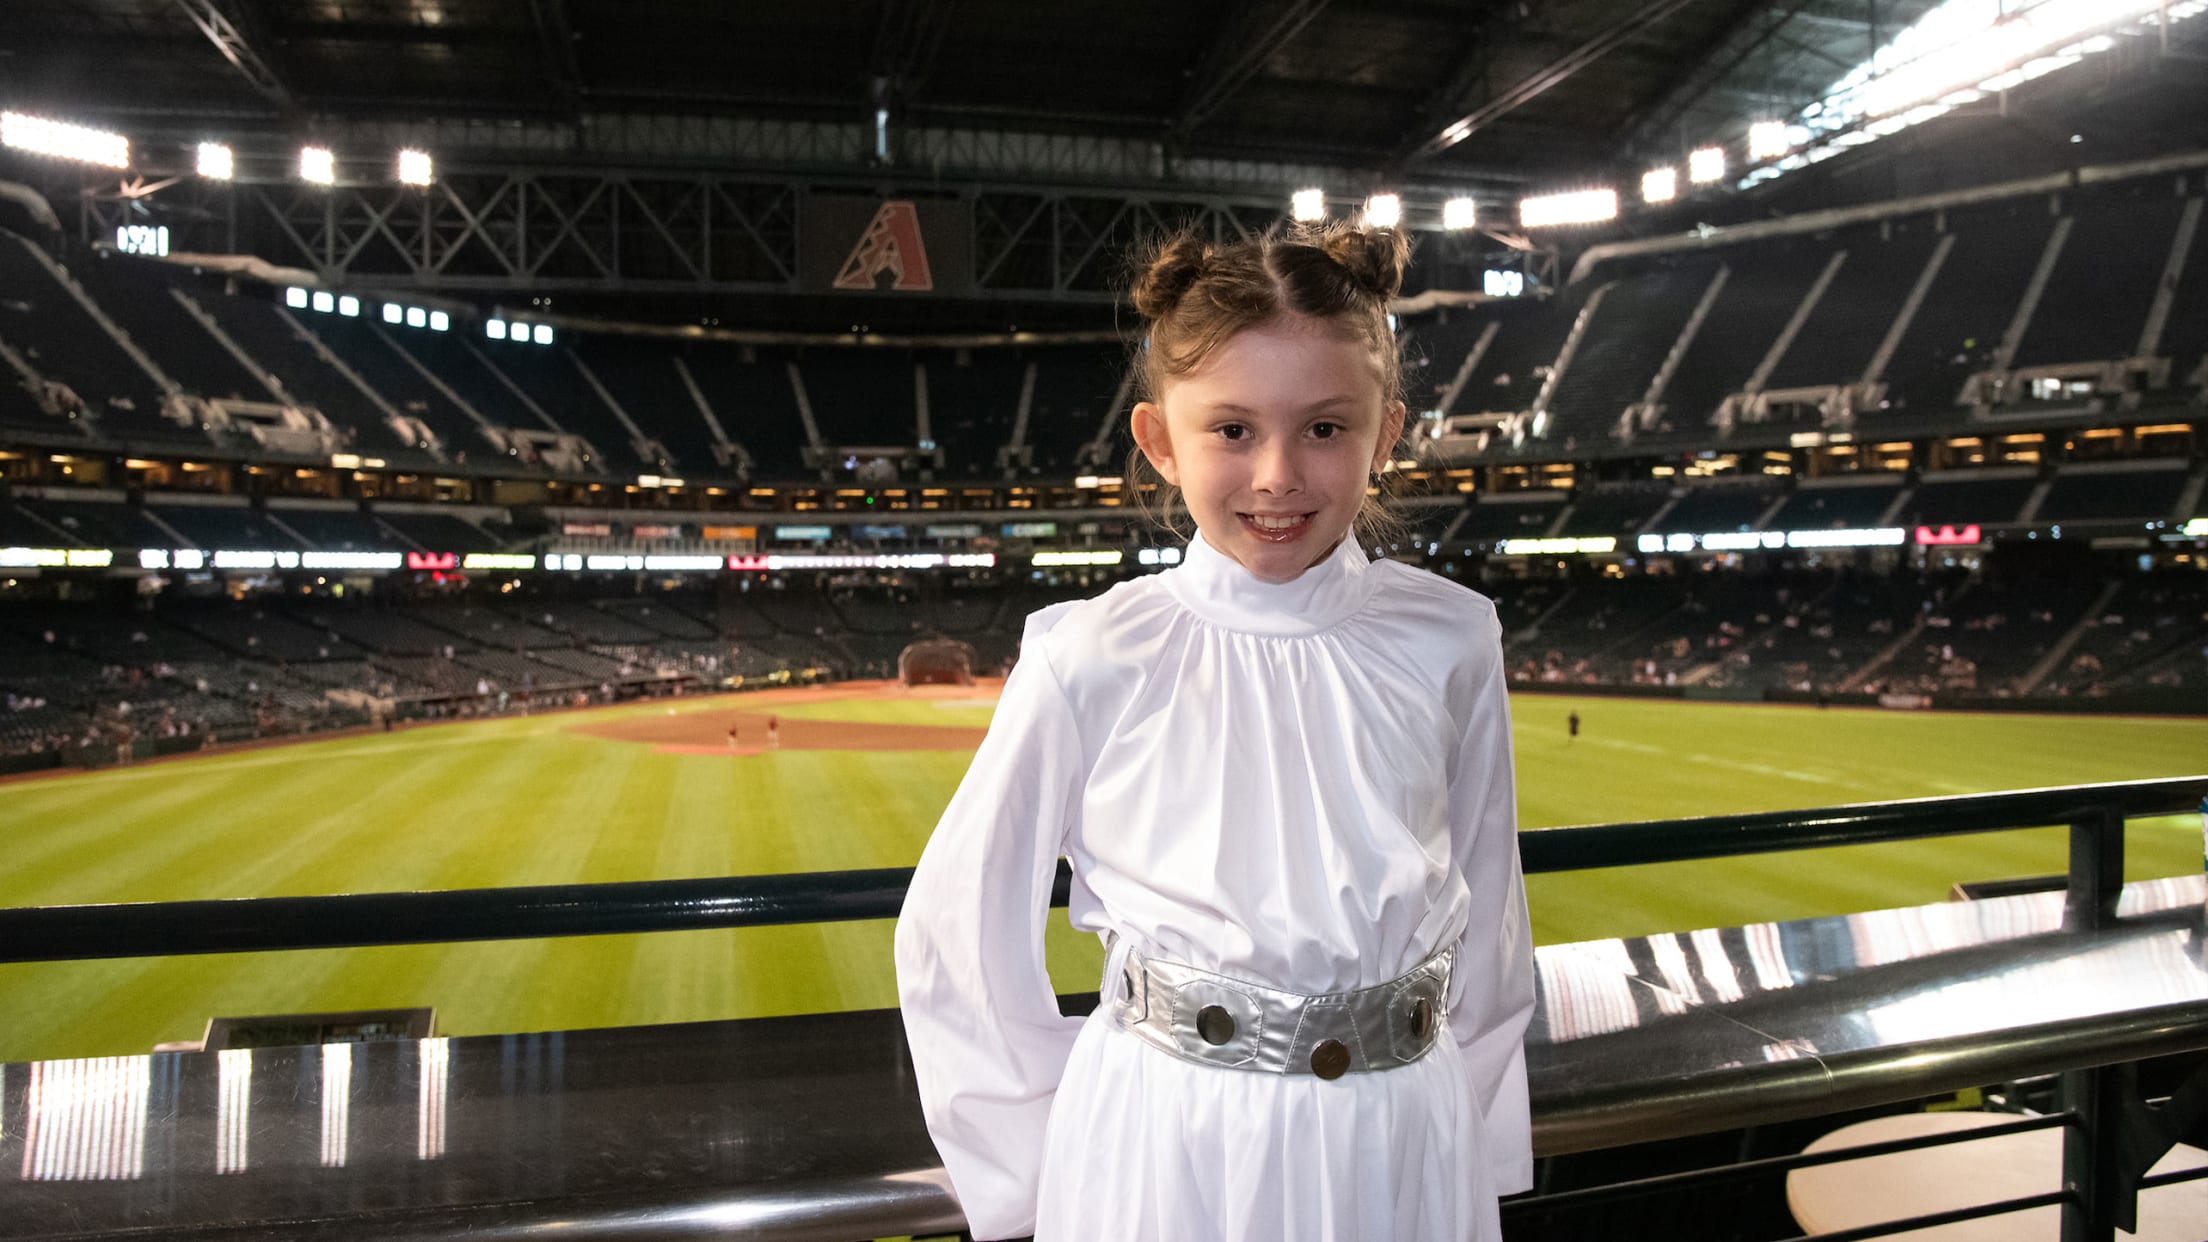 Photos: Diamondbacks fans celebrate Star Wars night at Chase Field